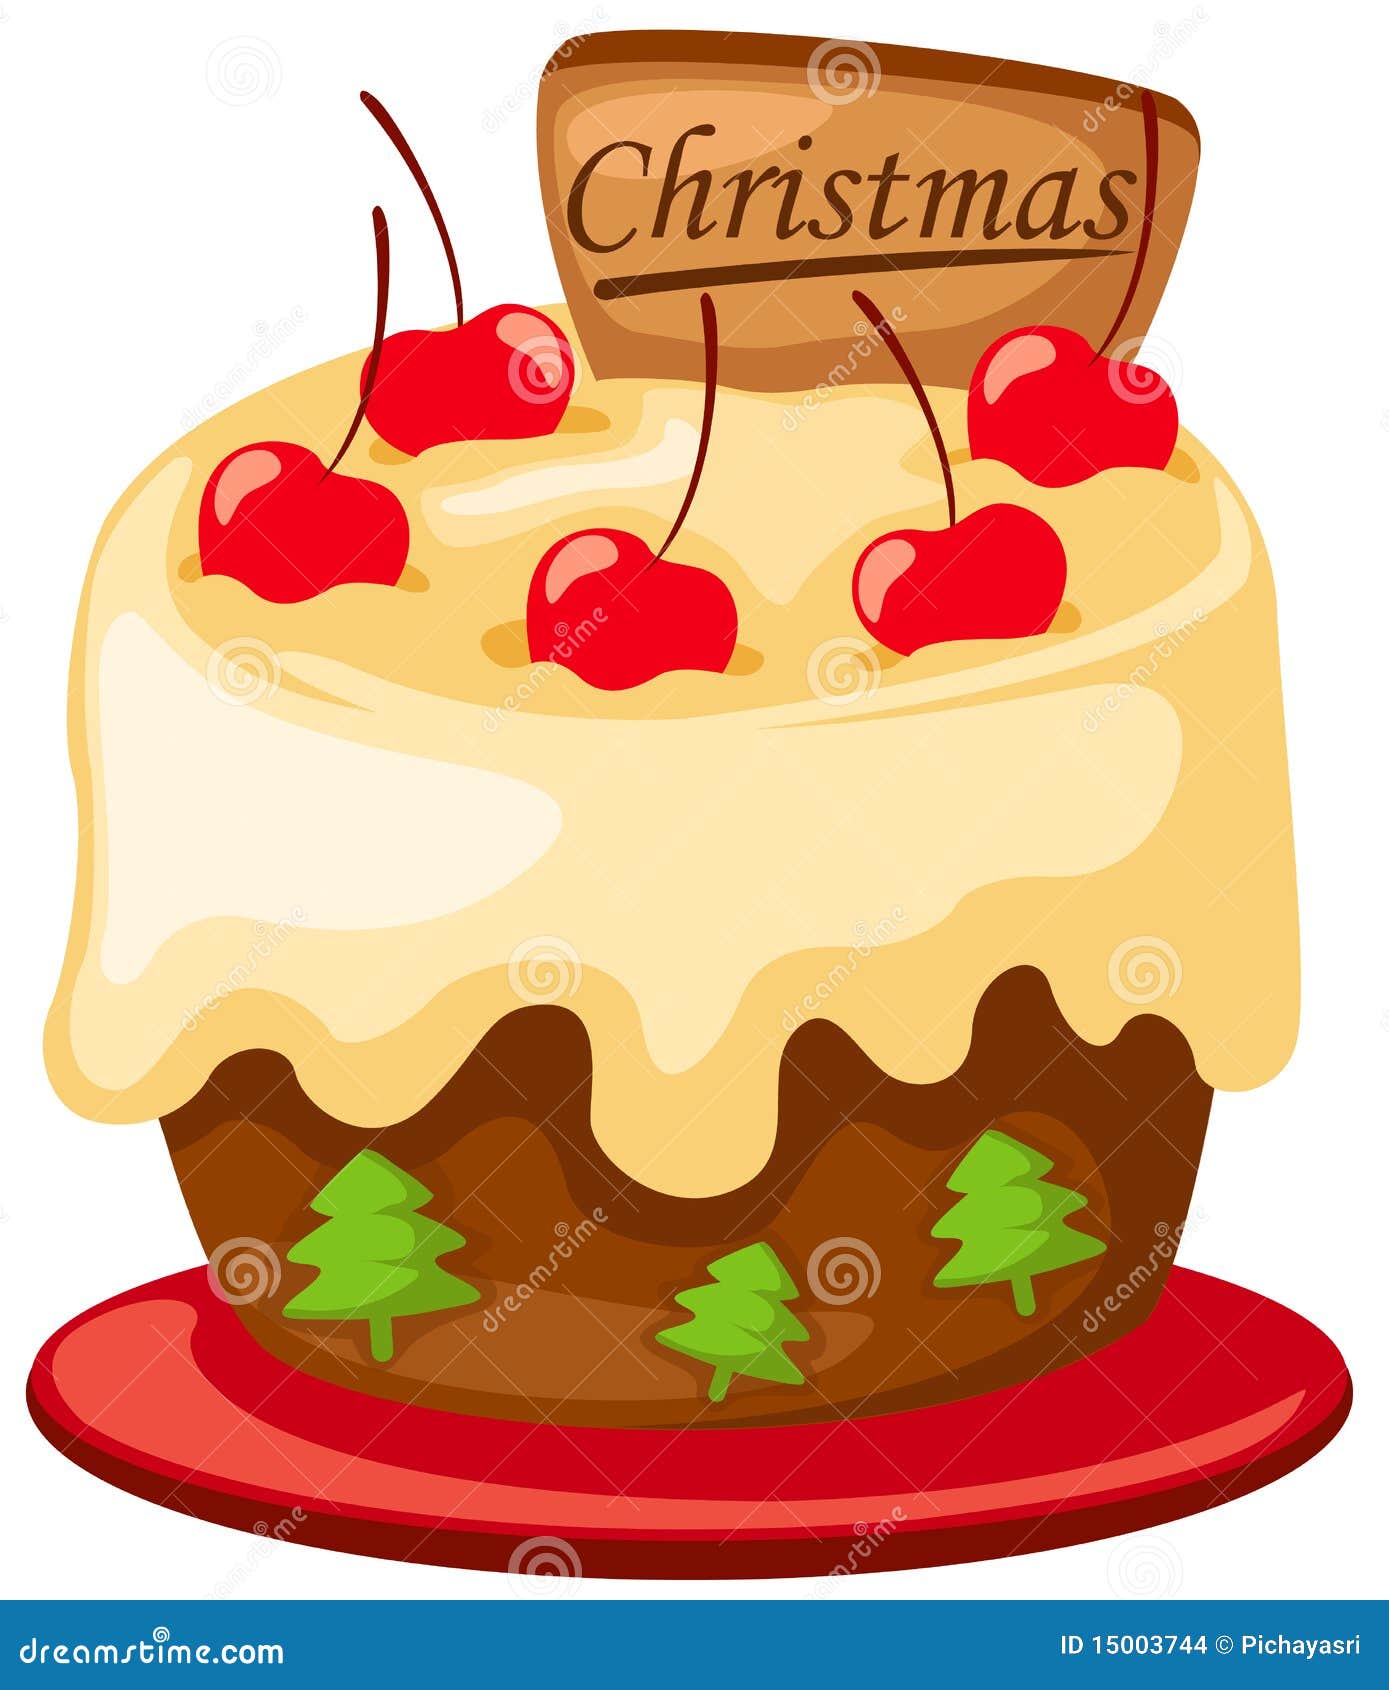 clip art christmas cake - photo #37